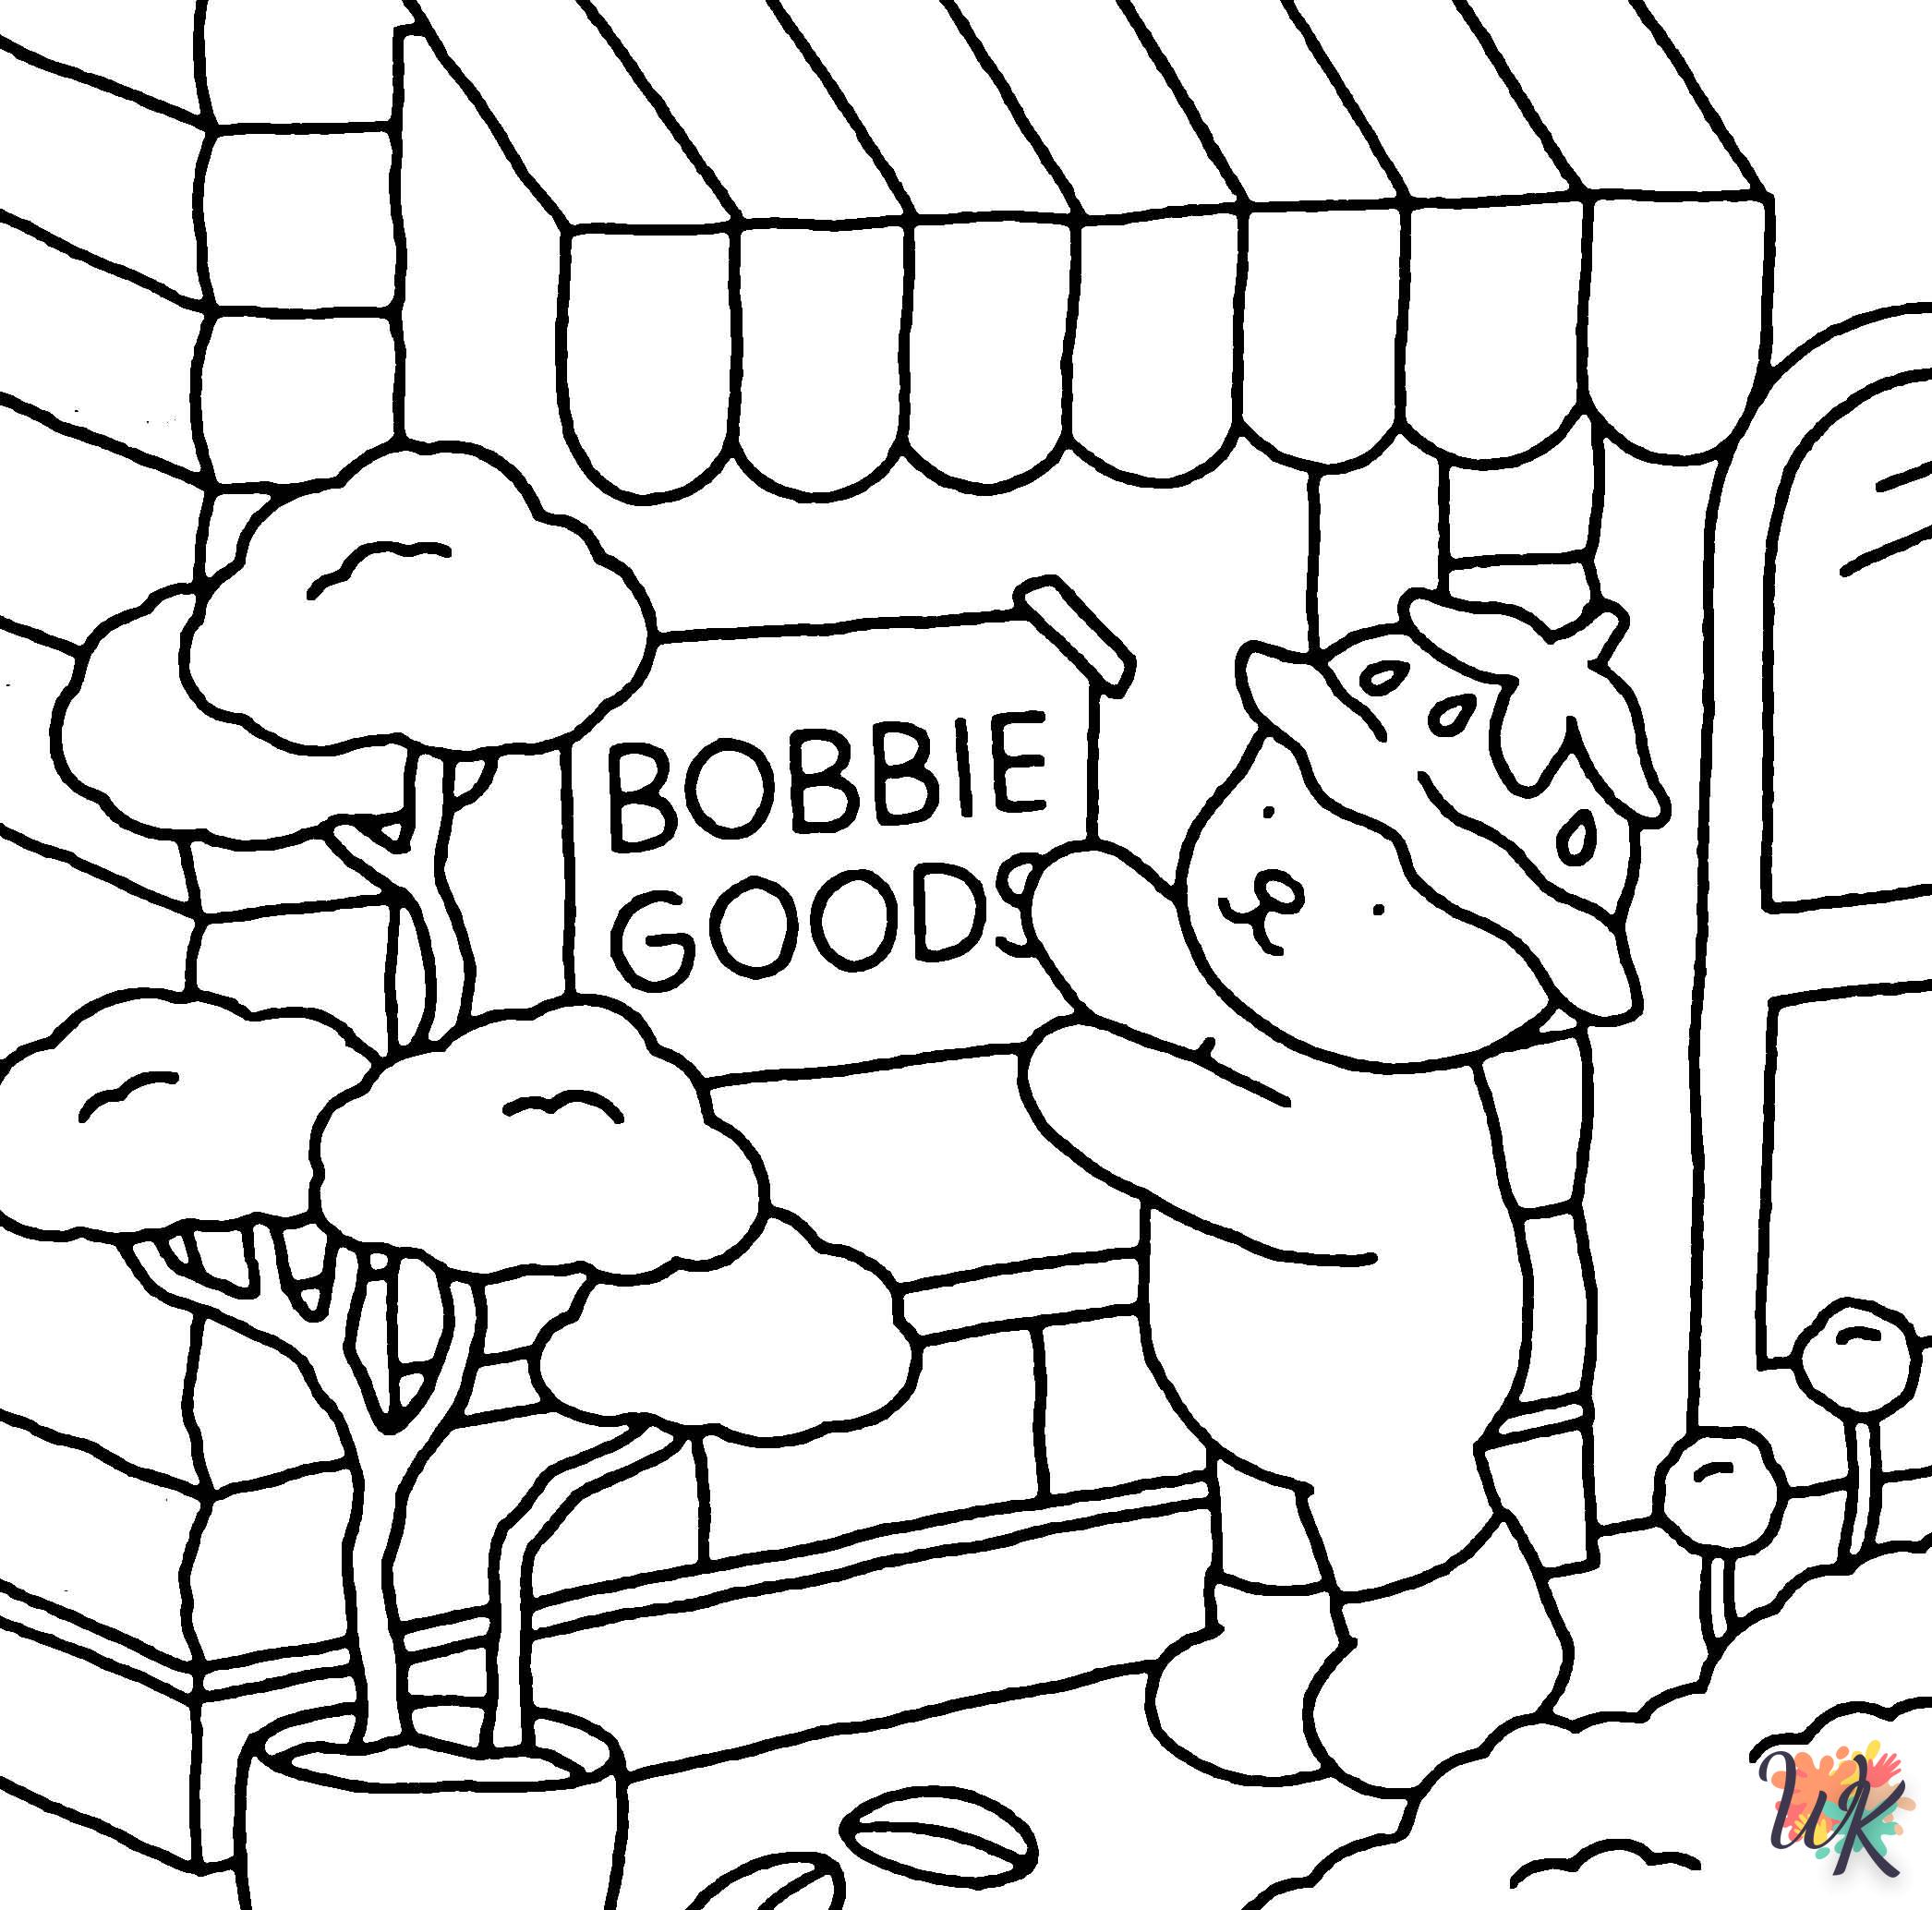 Coloriage Bobbie Goods